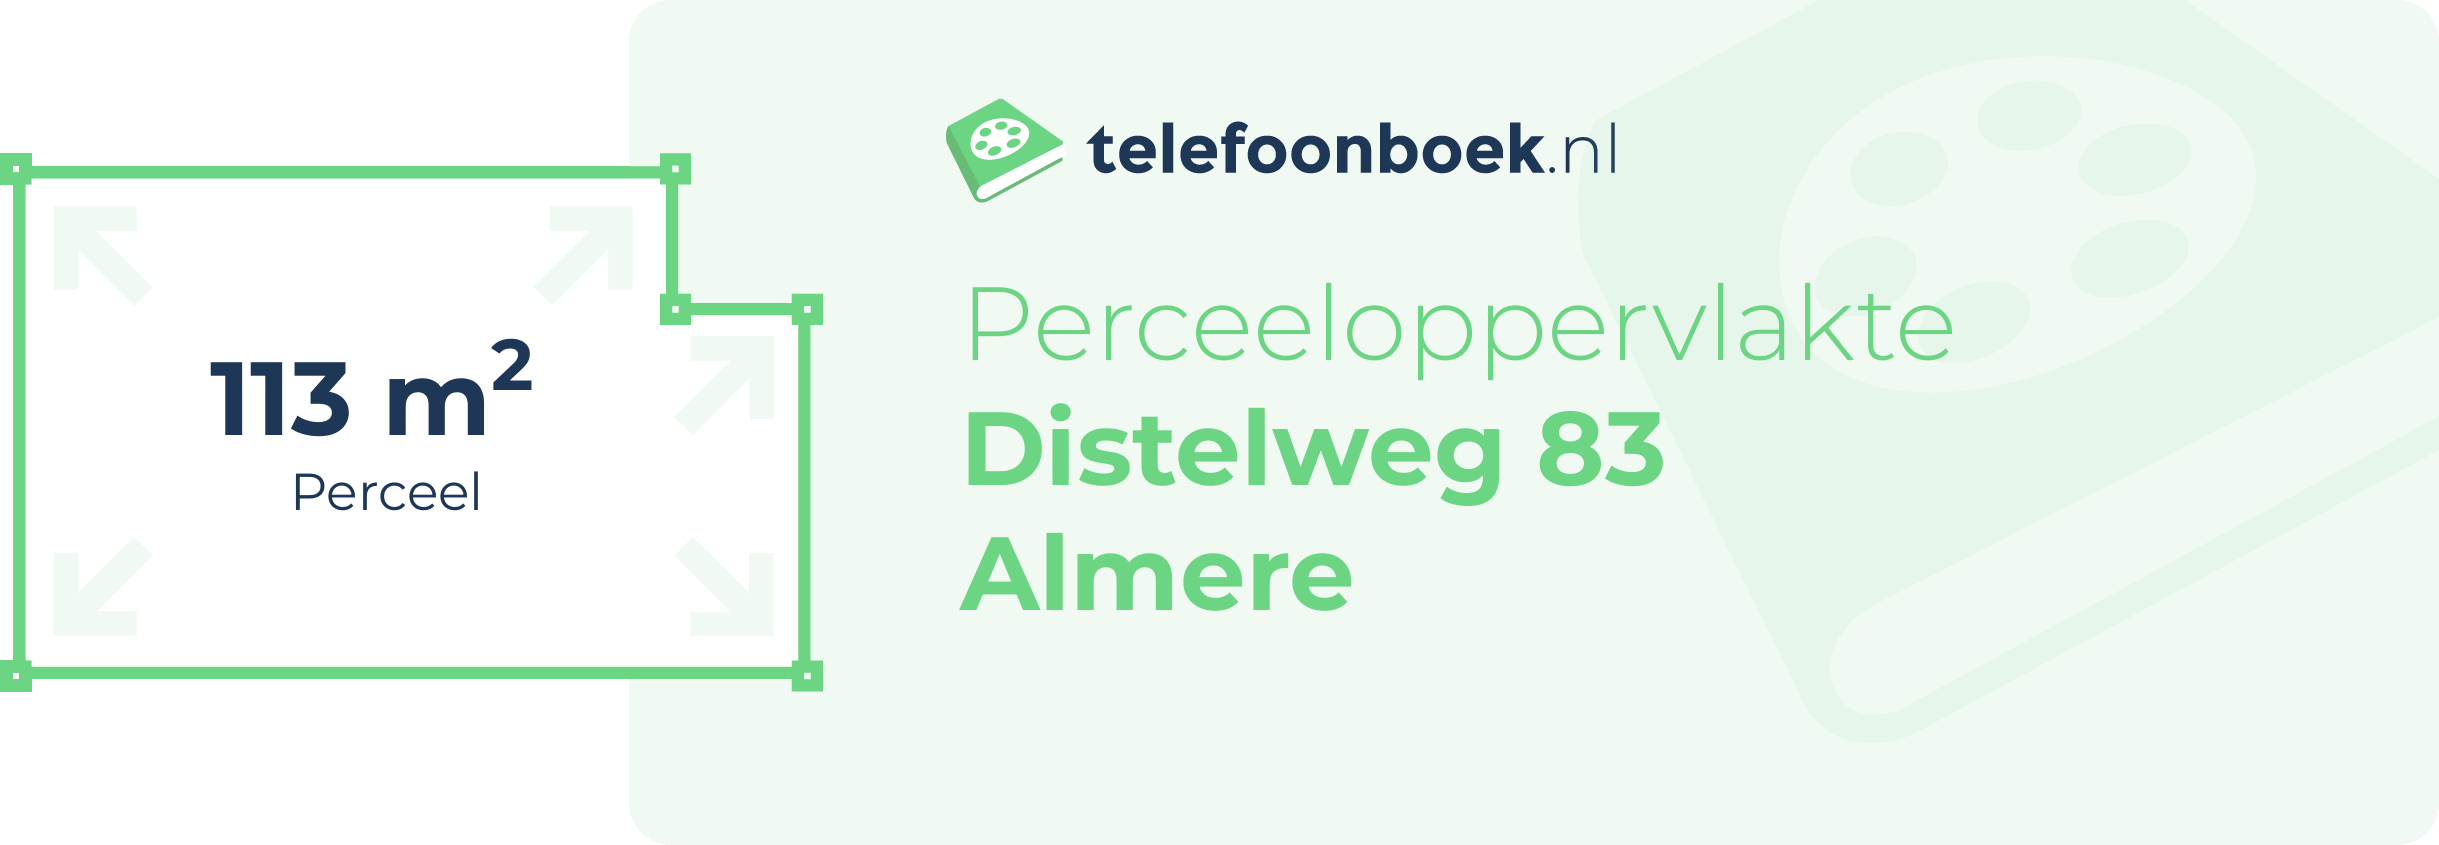 Perceeloppervlakte Distelweg 83 Almere